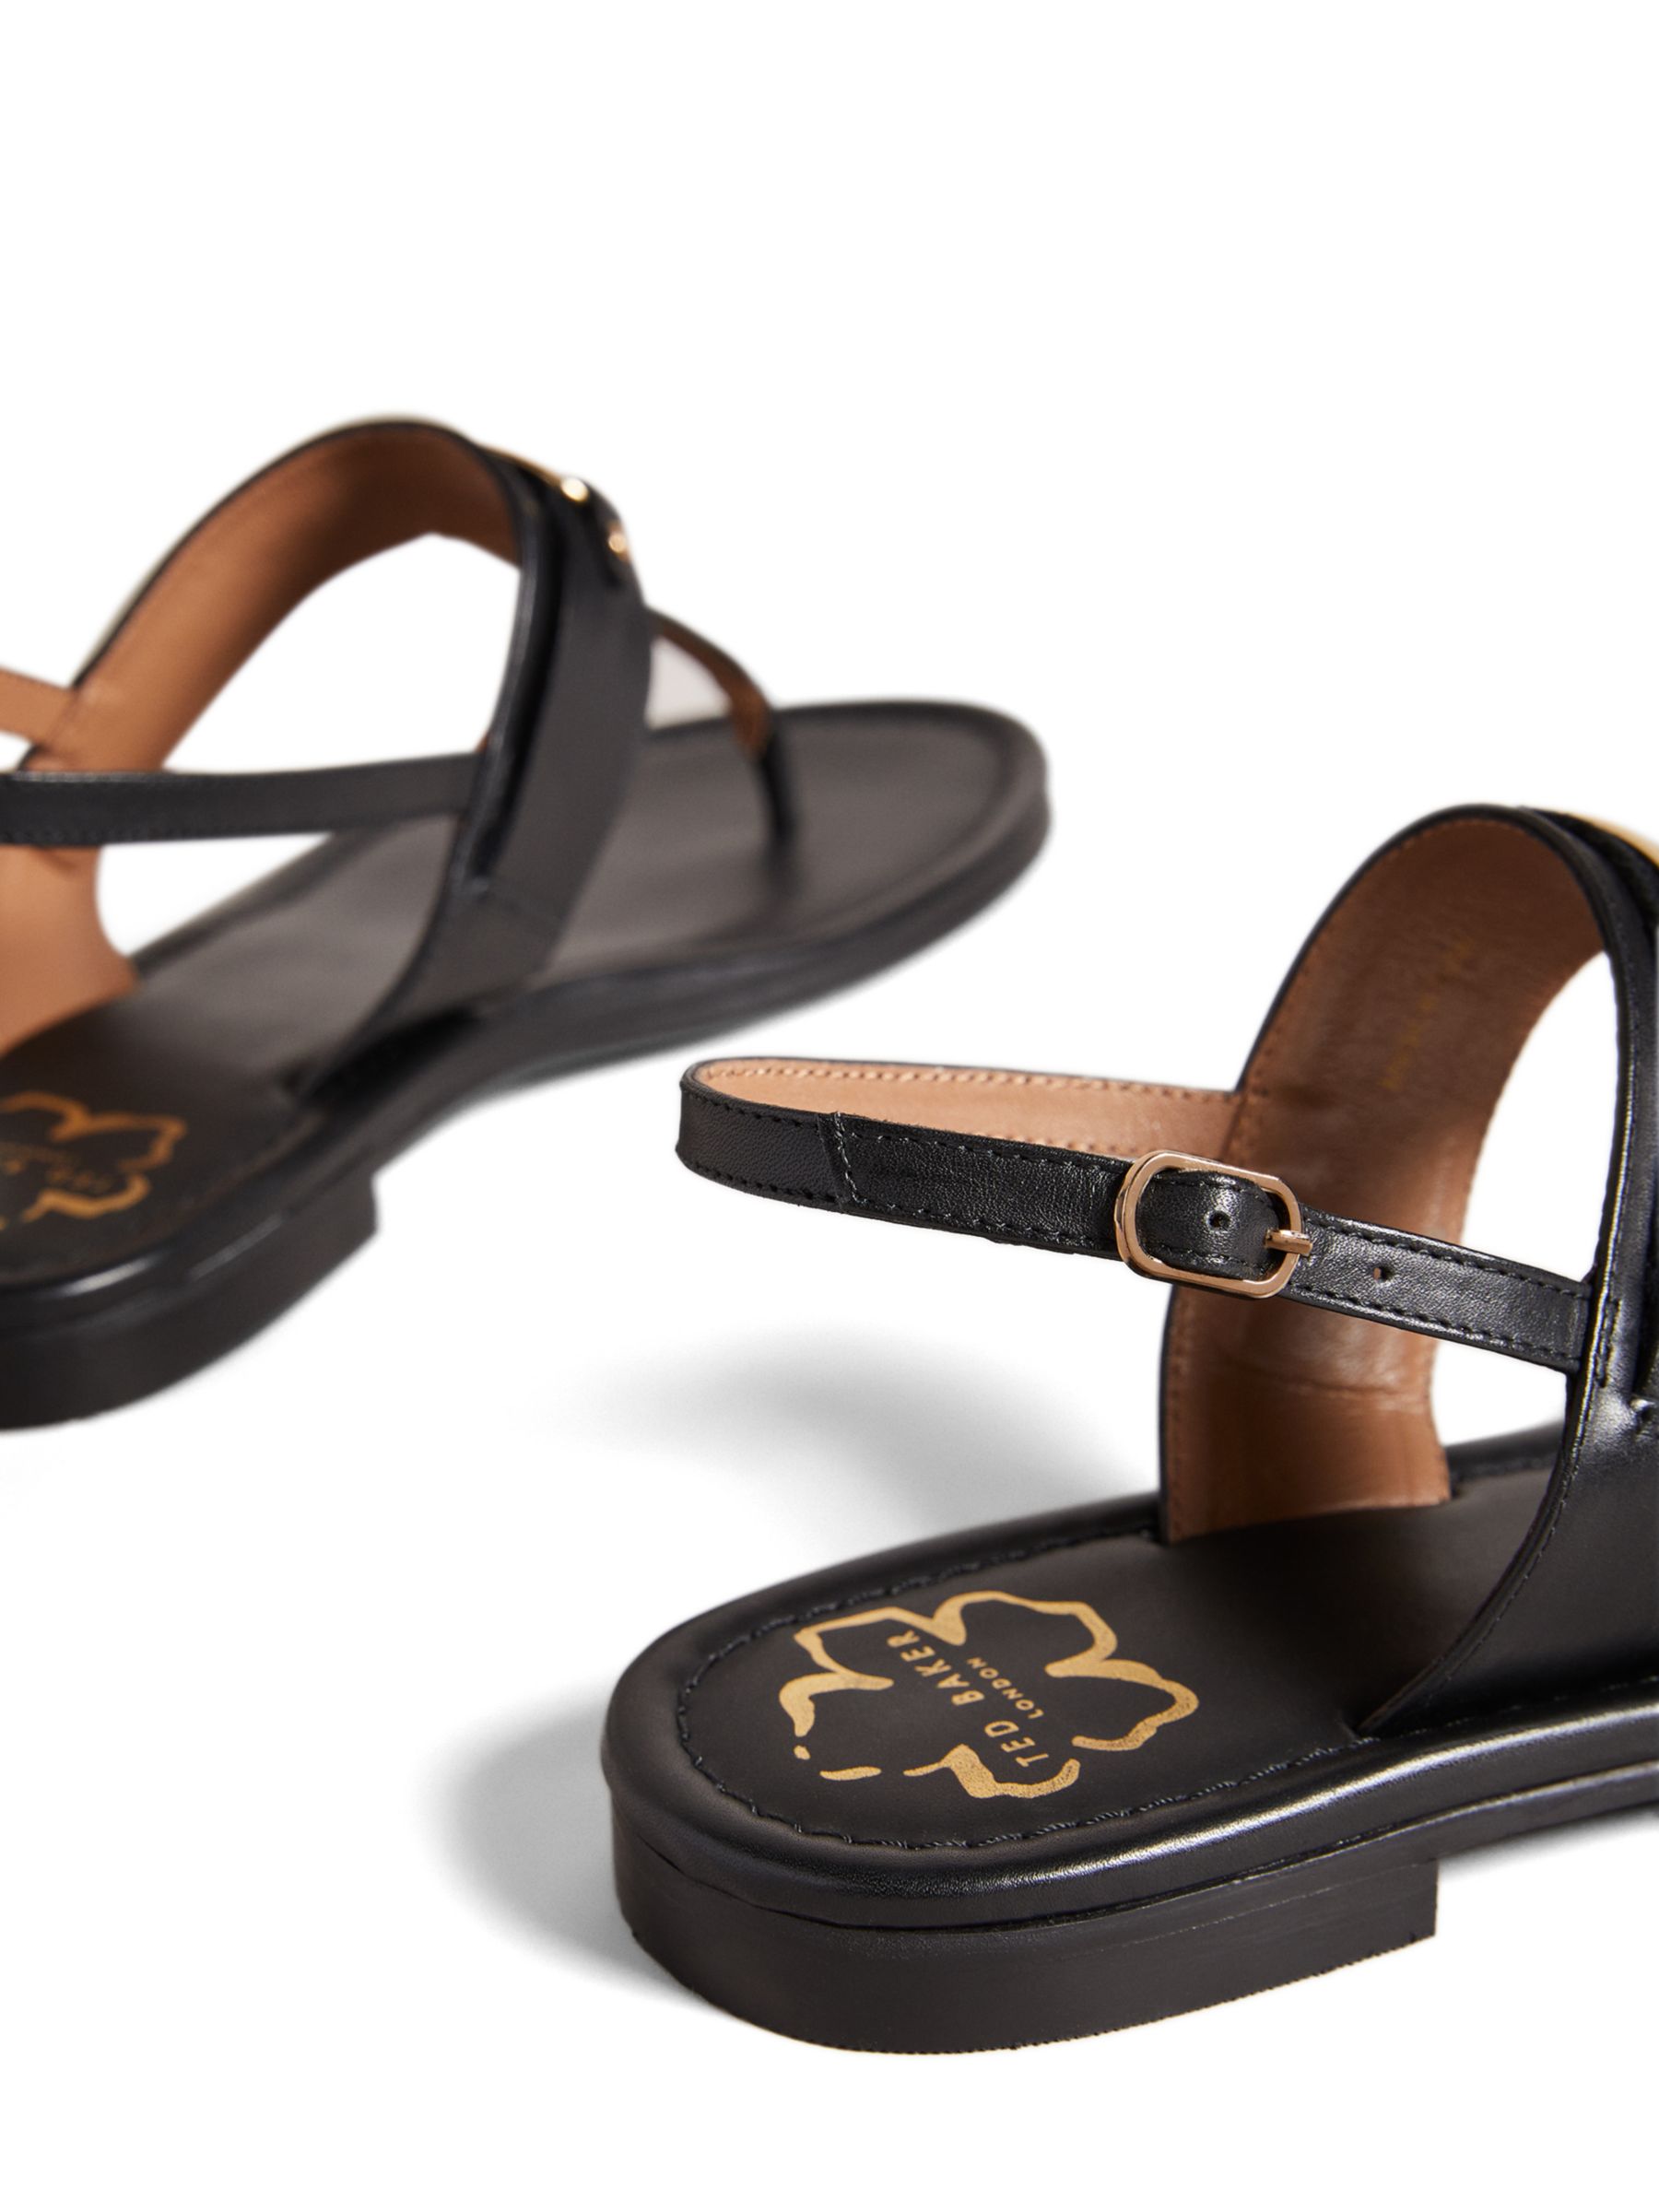 Ted Baker Jazmiah Leather Flat Sandals, Black at John Lewis & Partners